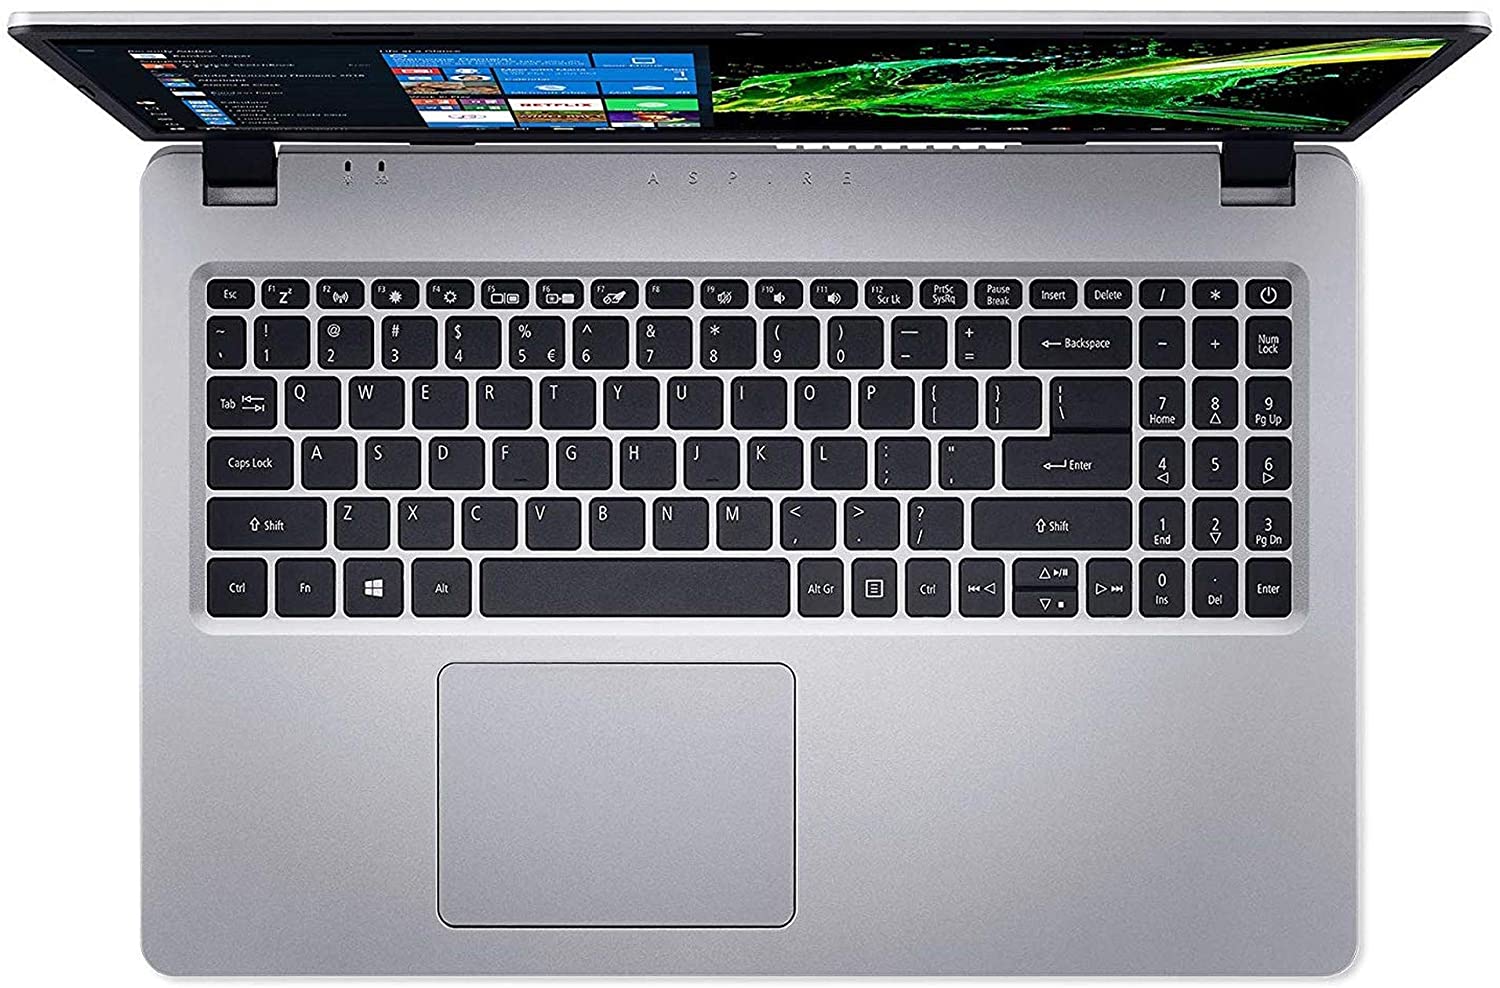 Acer Aspire 5 15.6" FHD Laptop Computer, AMD Ryzen 3 3200U Up to 3.5GHz (Beats i5-7200U), 4GB DDR4 RAM, 128GB PCIe SSD, 802.11ac WiFi, HDMI, Backlit Keyboard, Silver, Windows 10 Home in S Mode - image 4 of 6